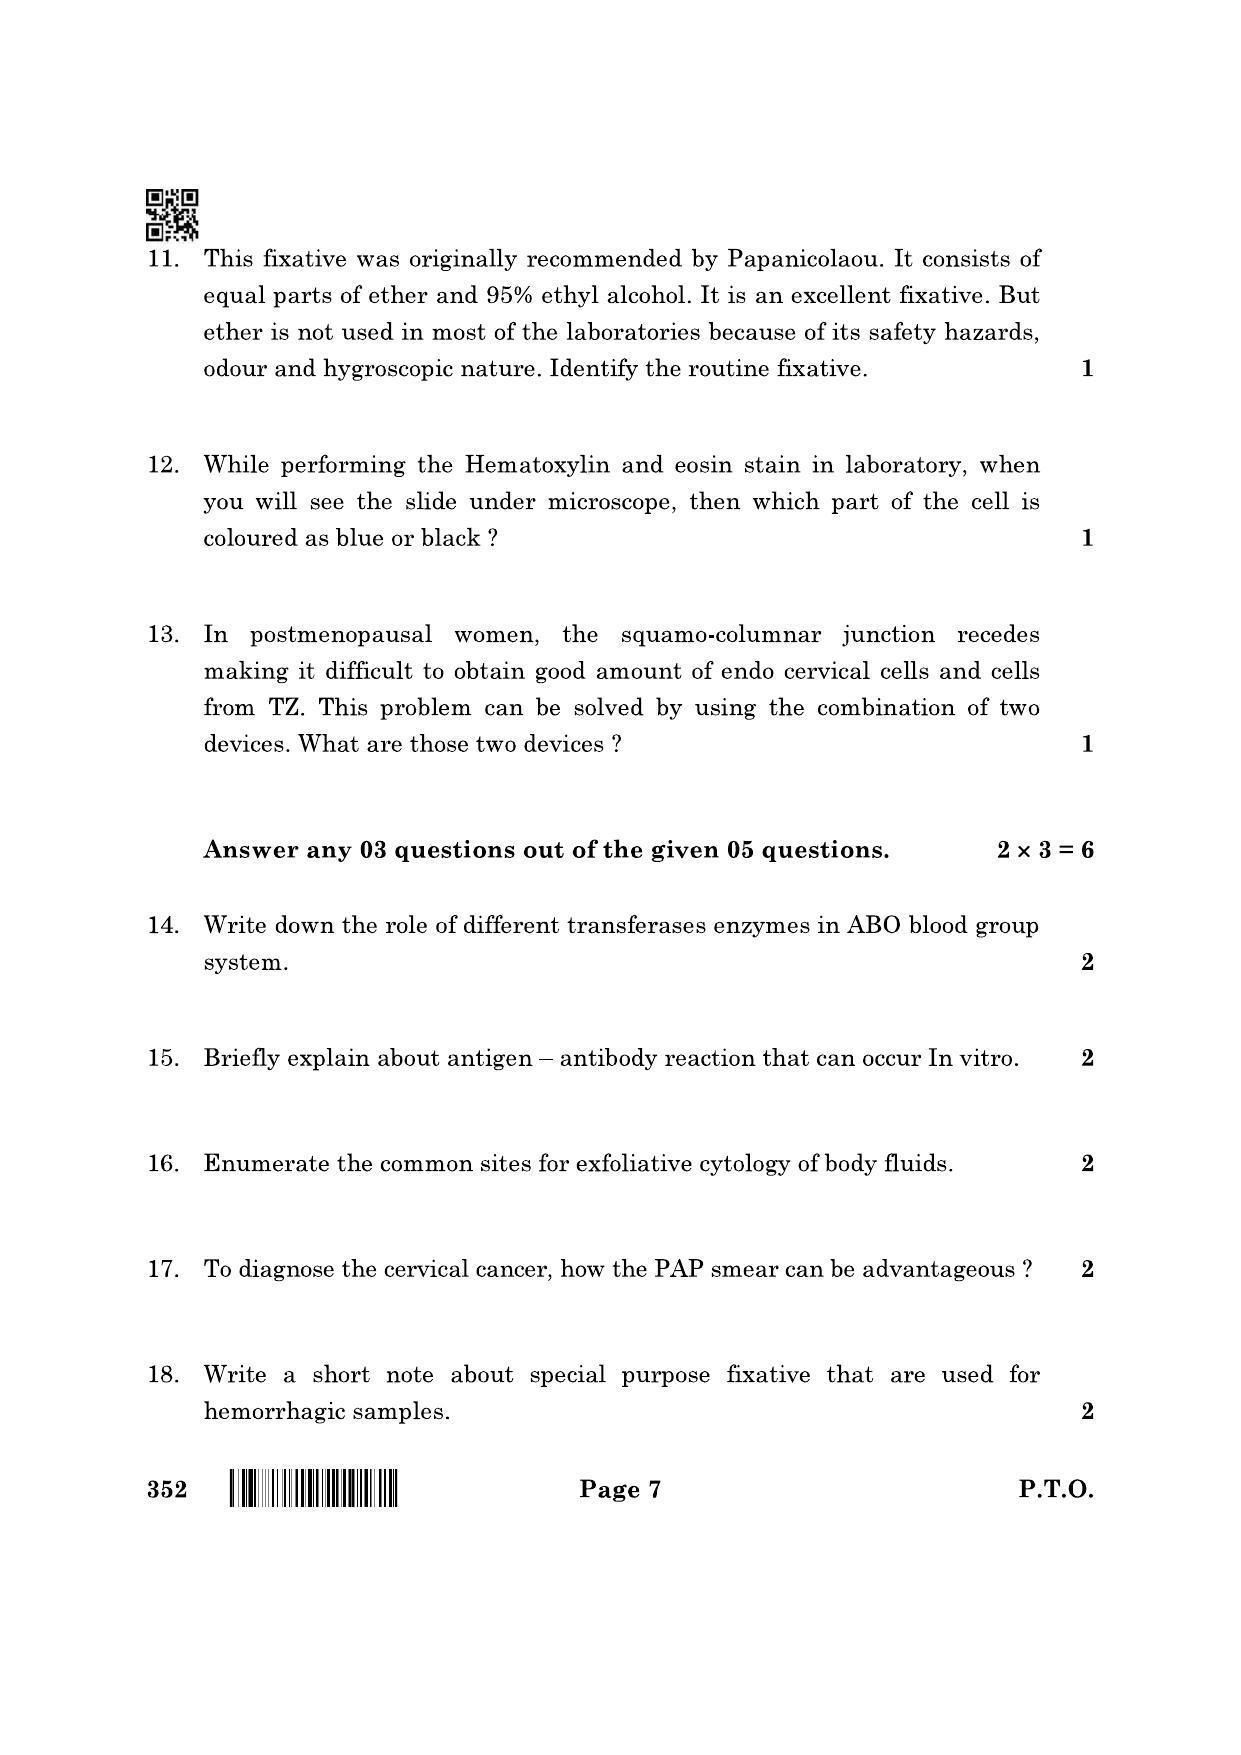 CBSE Class 12 352_Medical Diagnostics 2022 Question Paper - Page 7